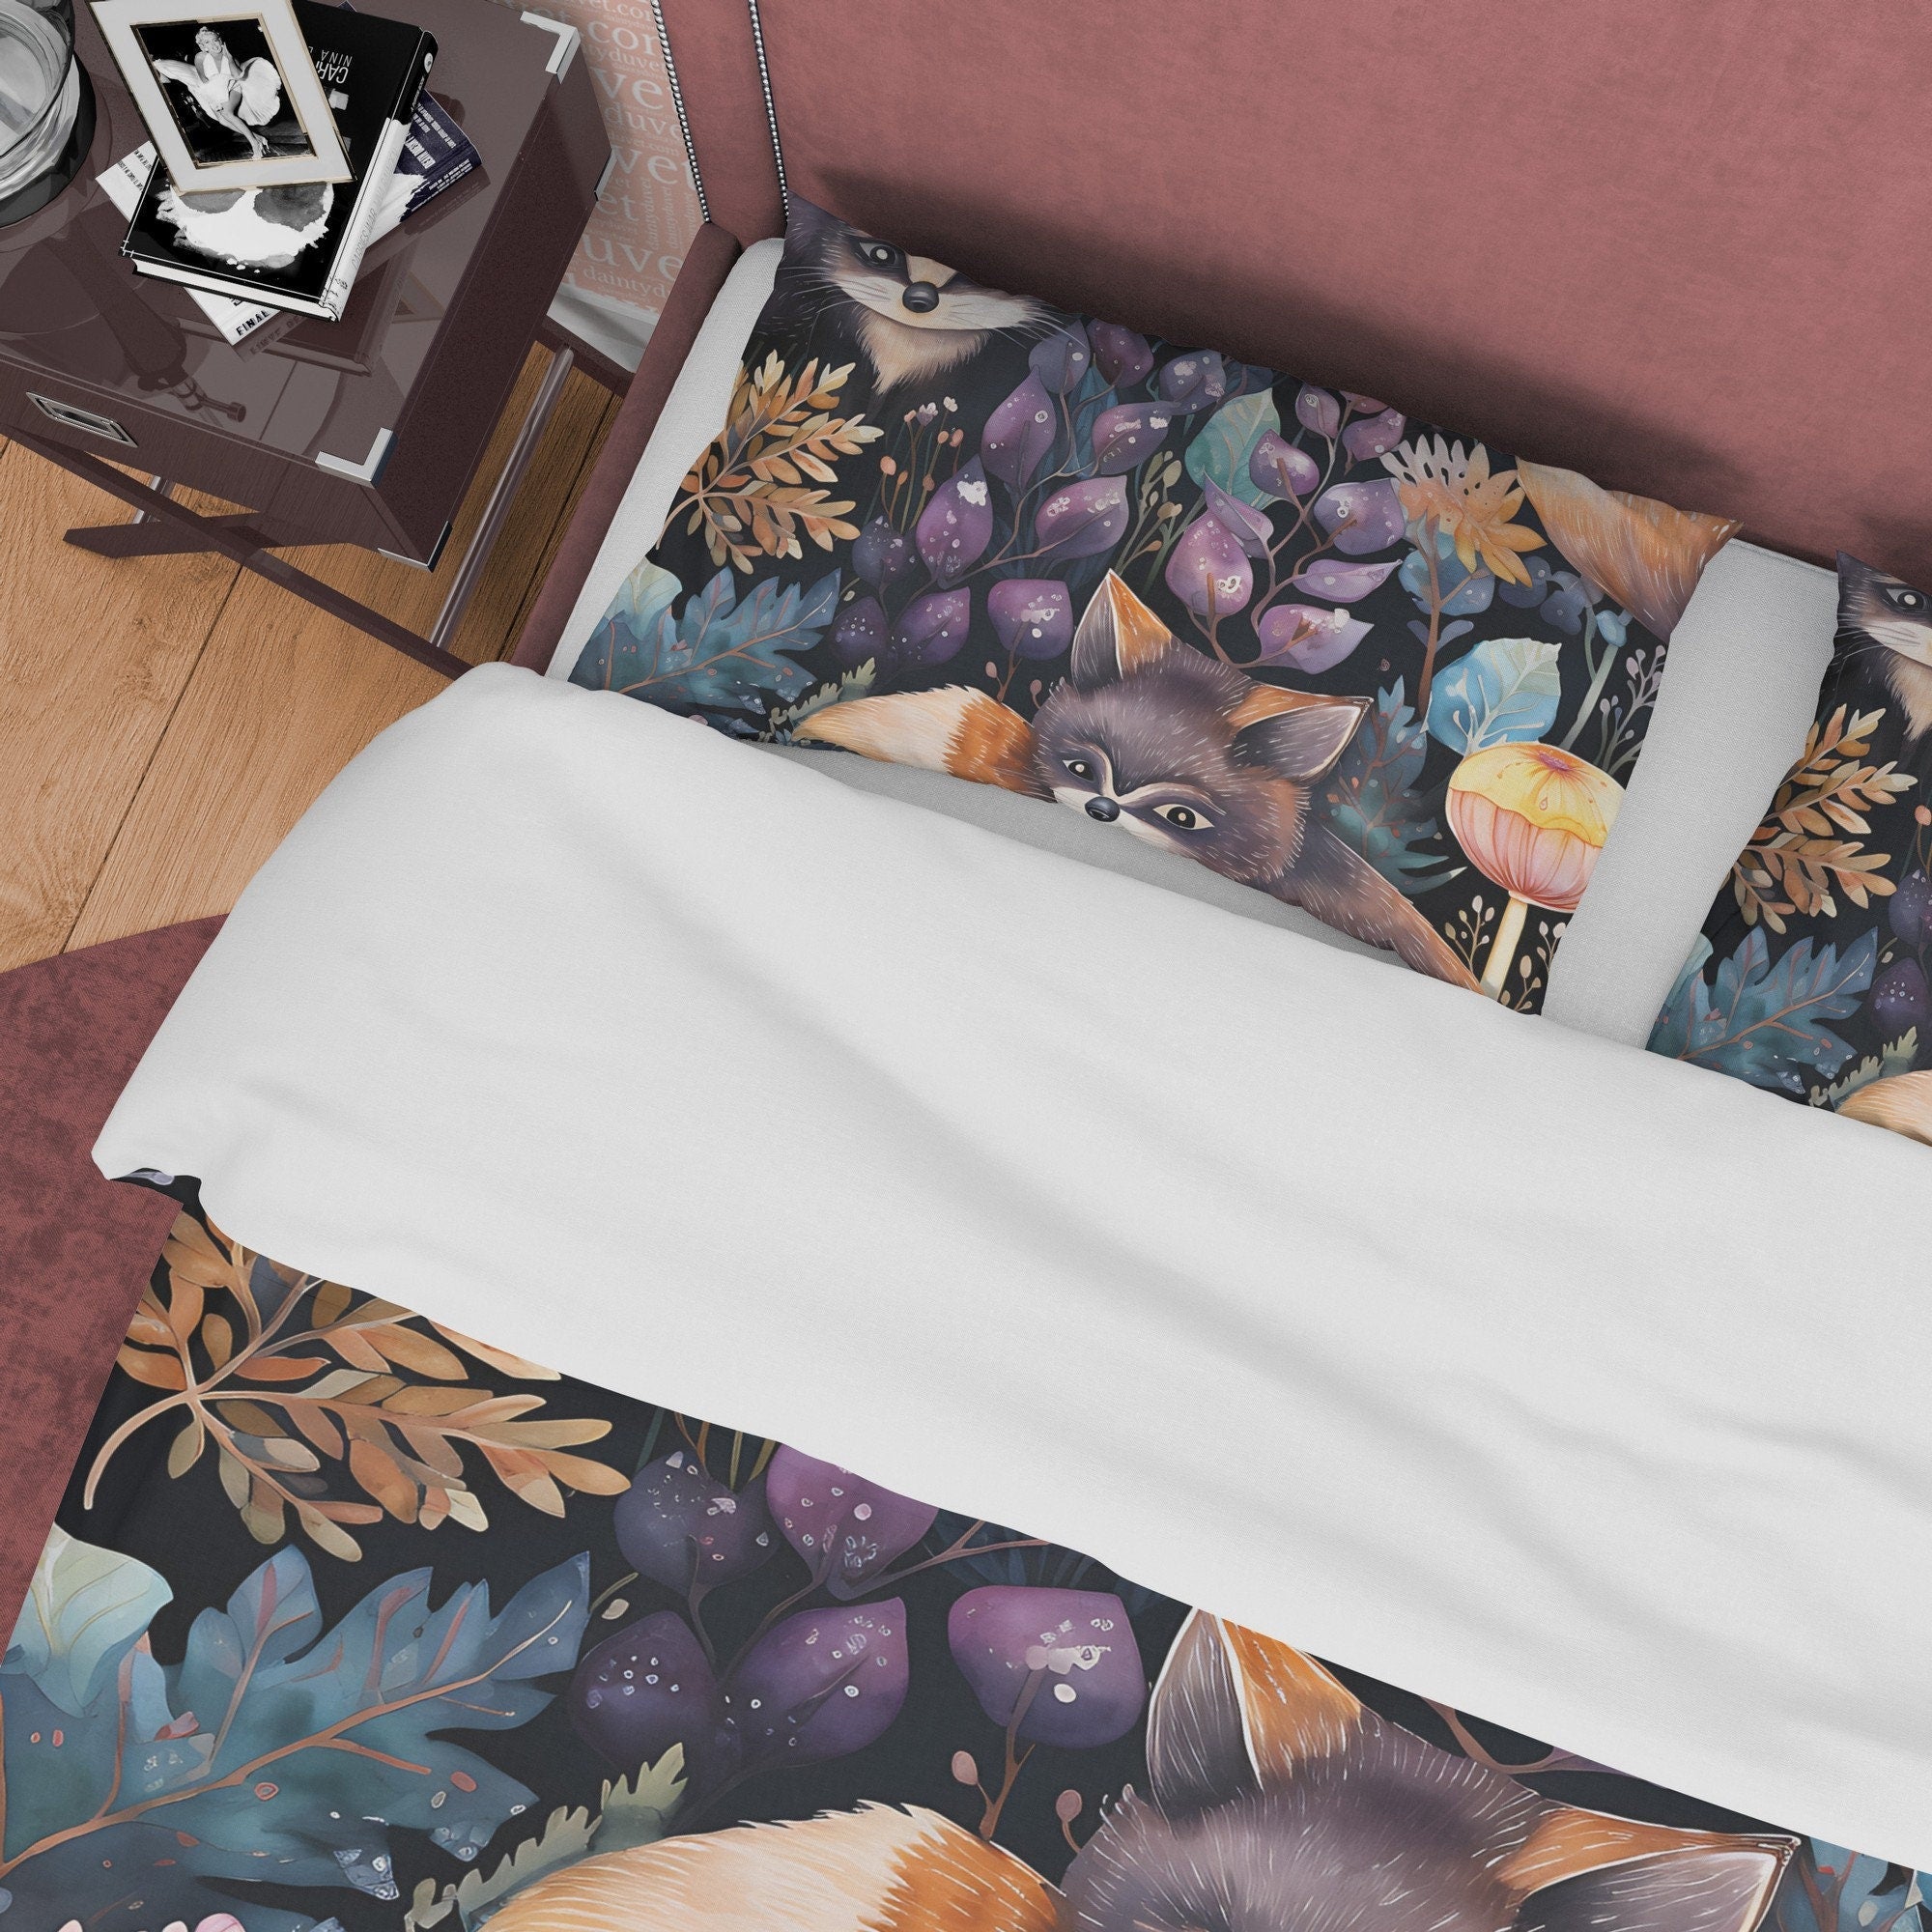 Wild Cat Duvet Cover Set, Magical Forest Quilt Cover Aesthetic Zipper Bedding, Halloween Room Decor, Enchanted Plant Blanket Cover